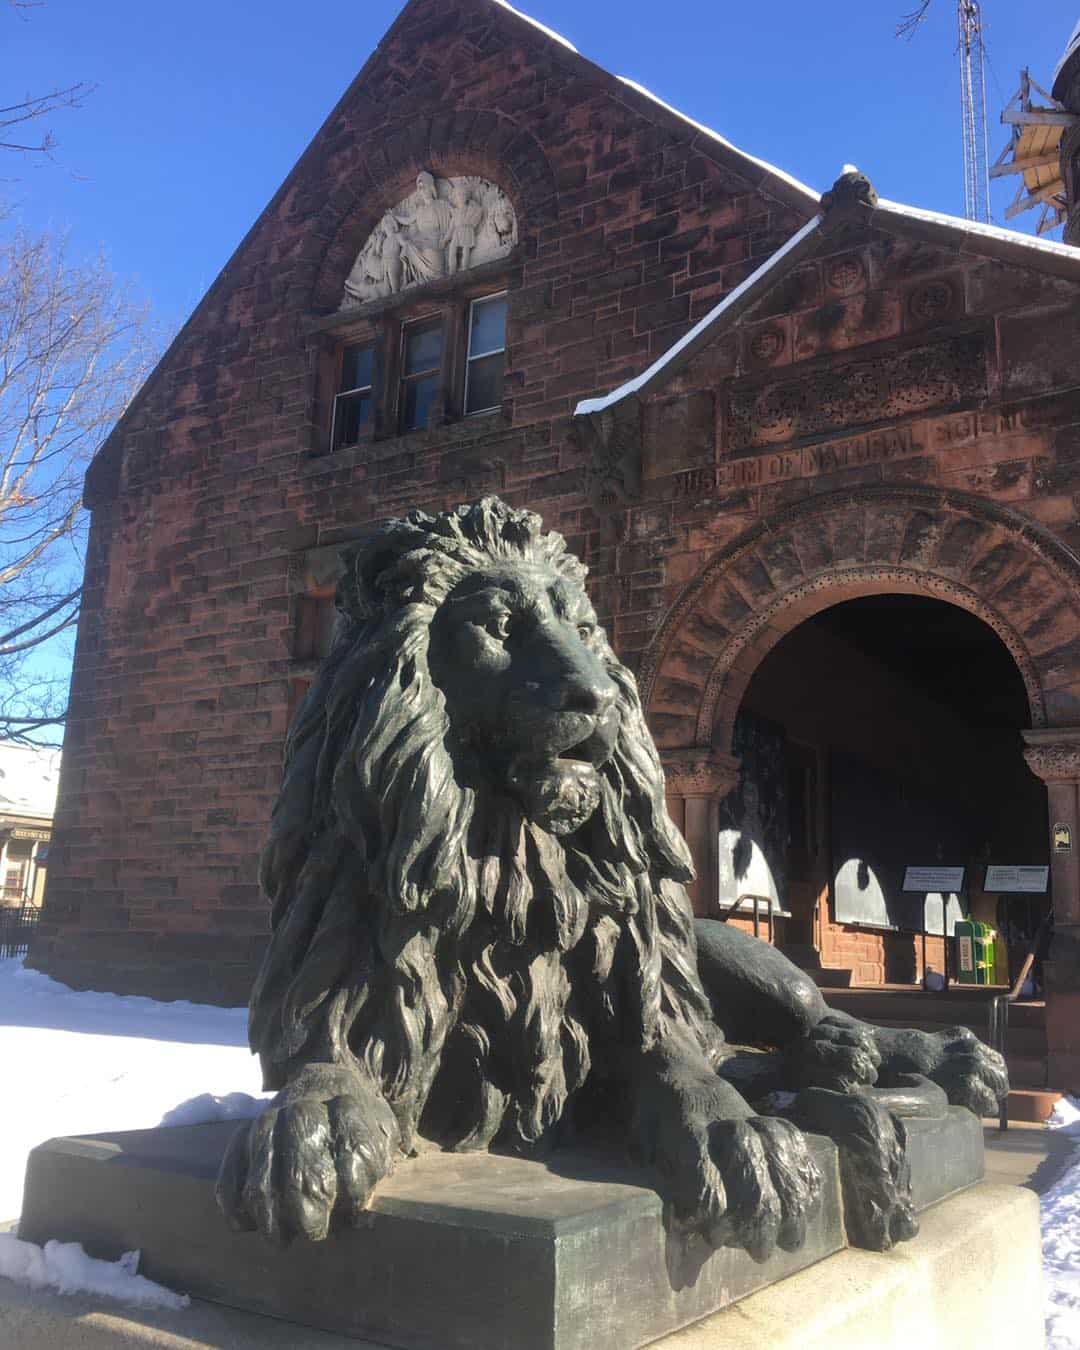 Fairbanks Museum - Lion Statue and Exterior